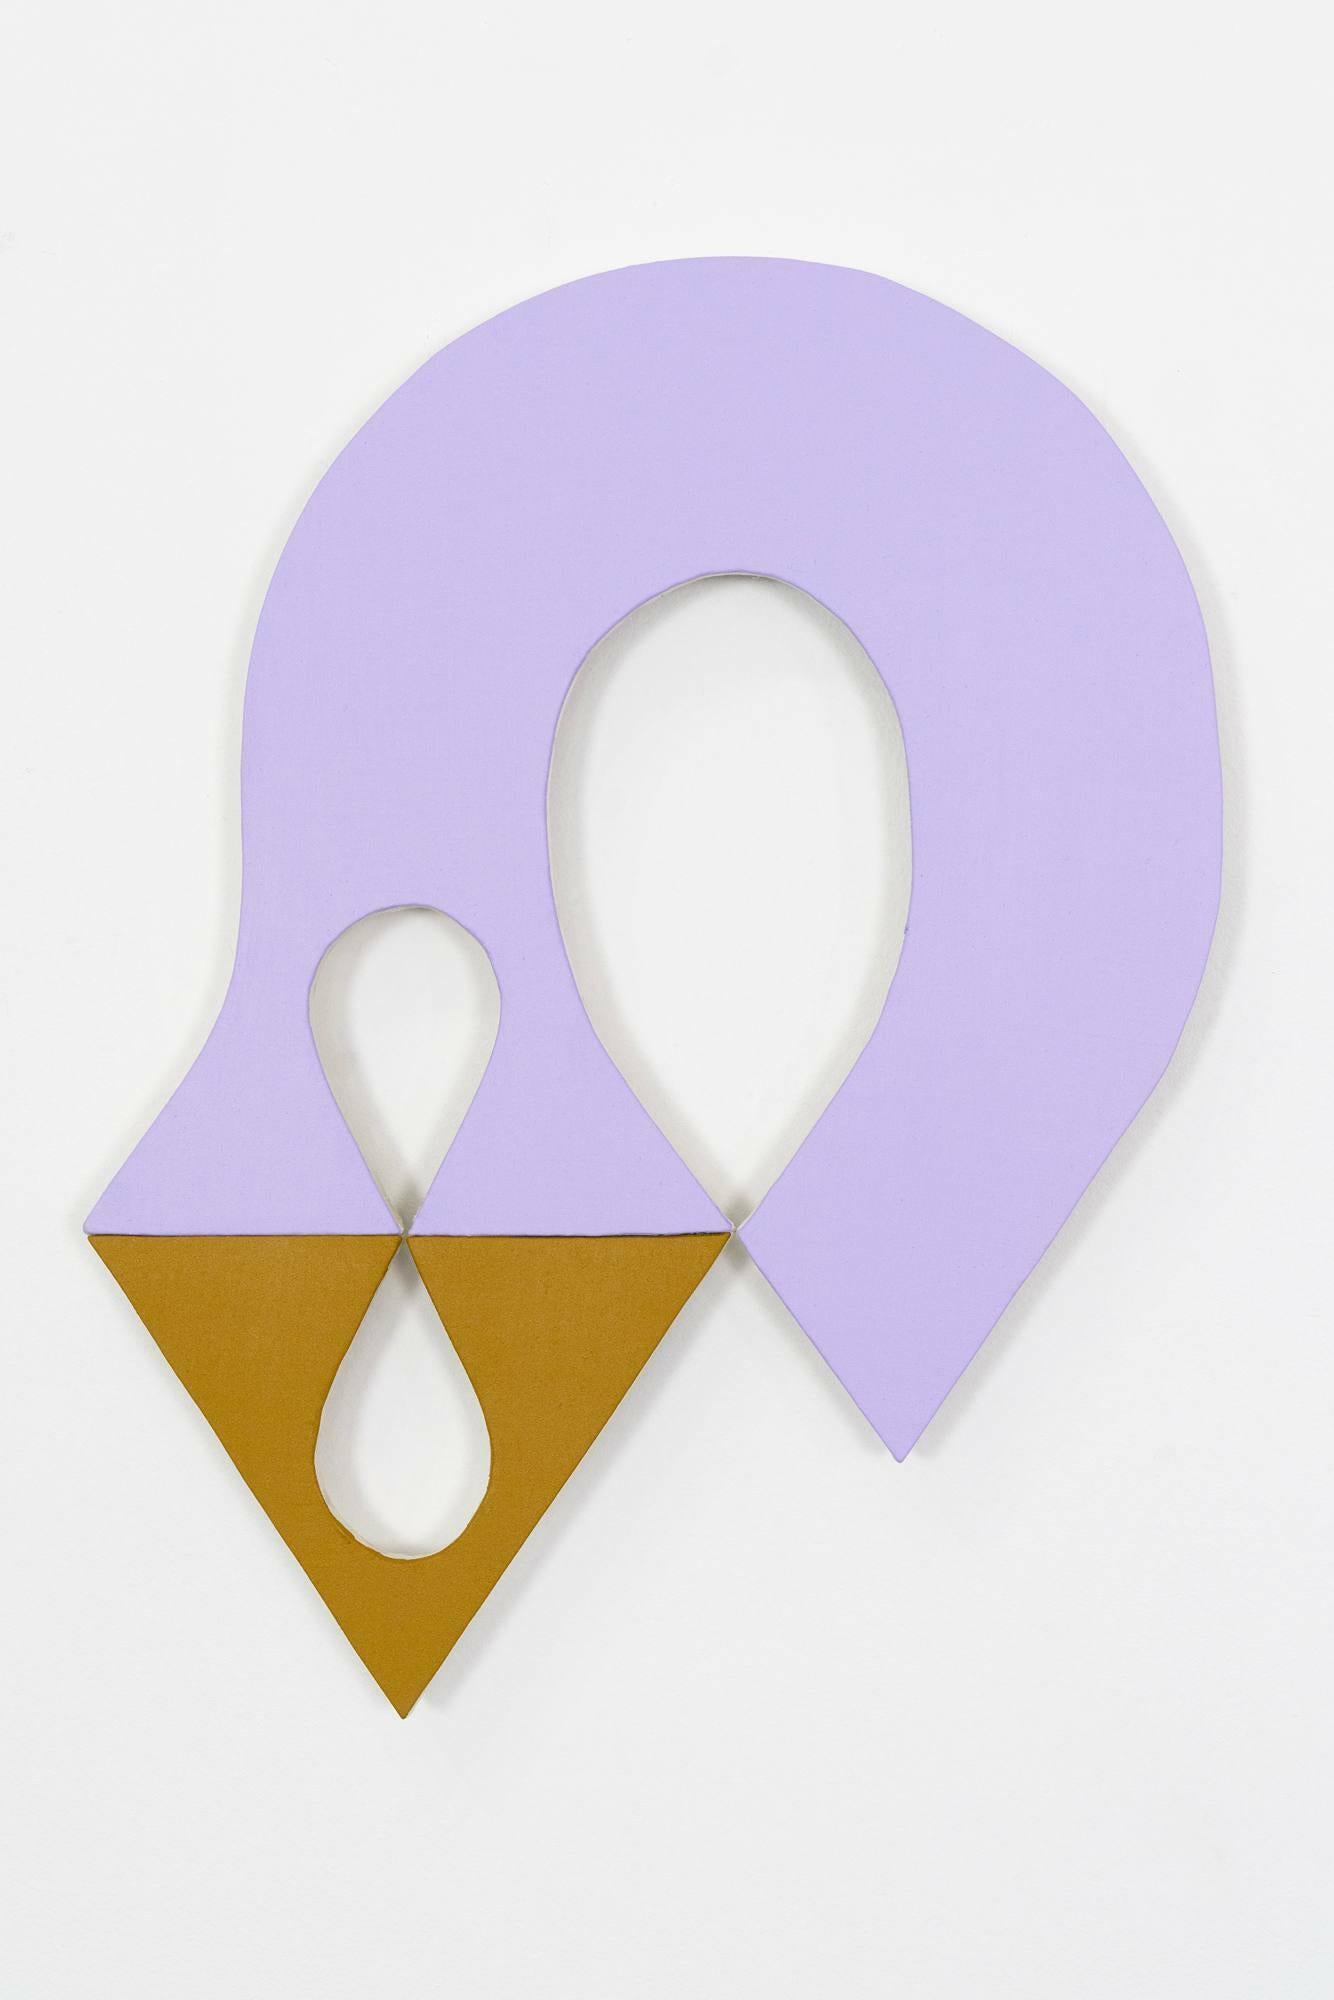 Jason Matherly Abstract Painting – Mixed Media-Wandskulptur „22-17“ – violett, ockerfarben